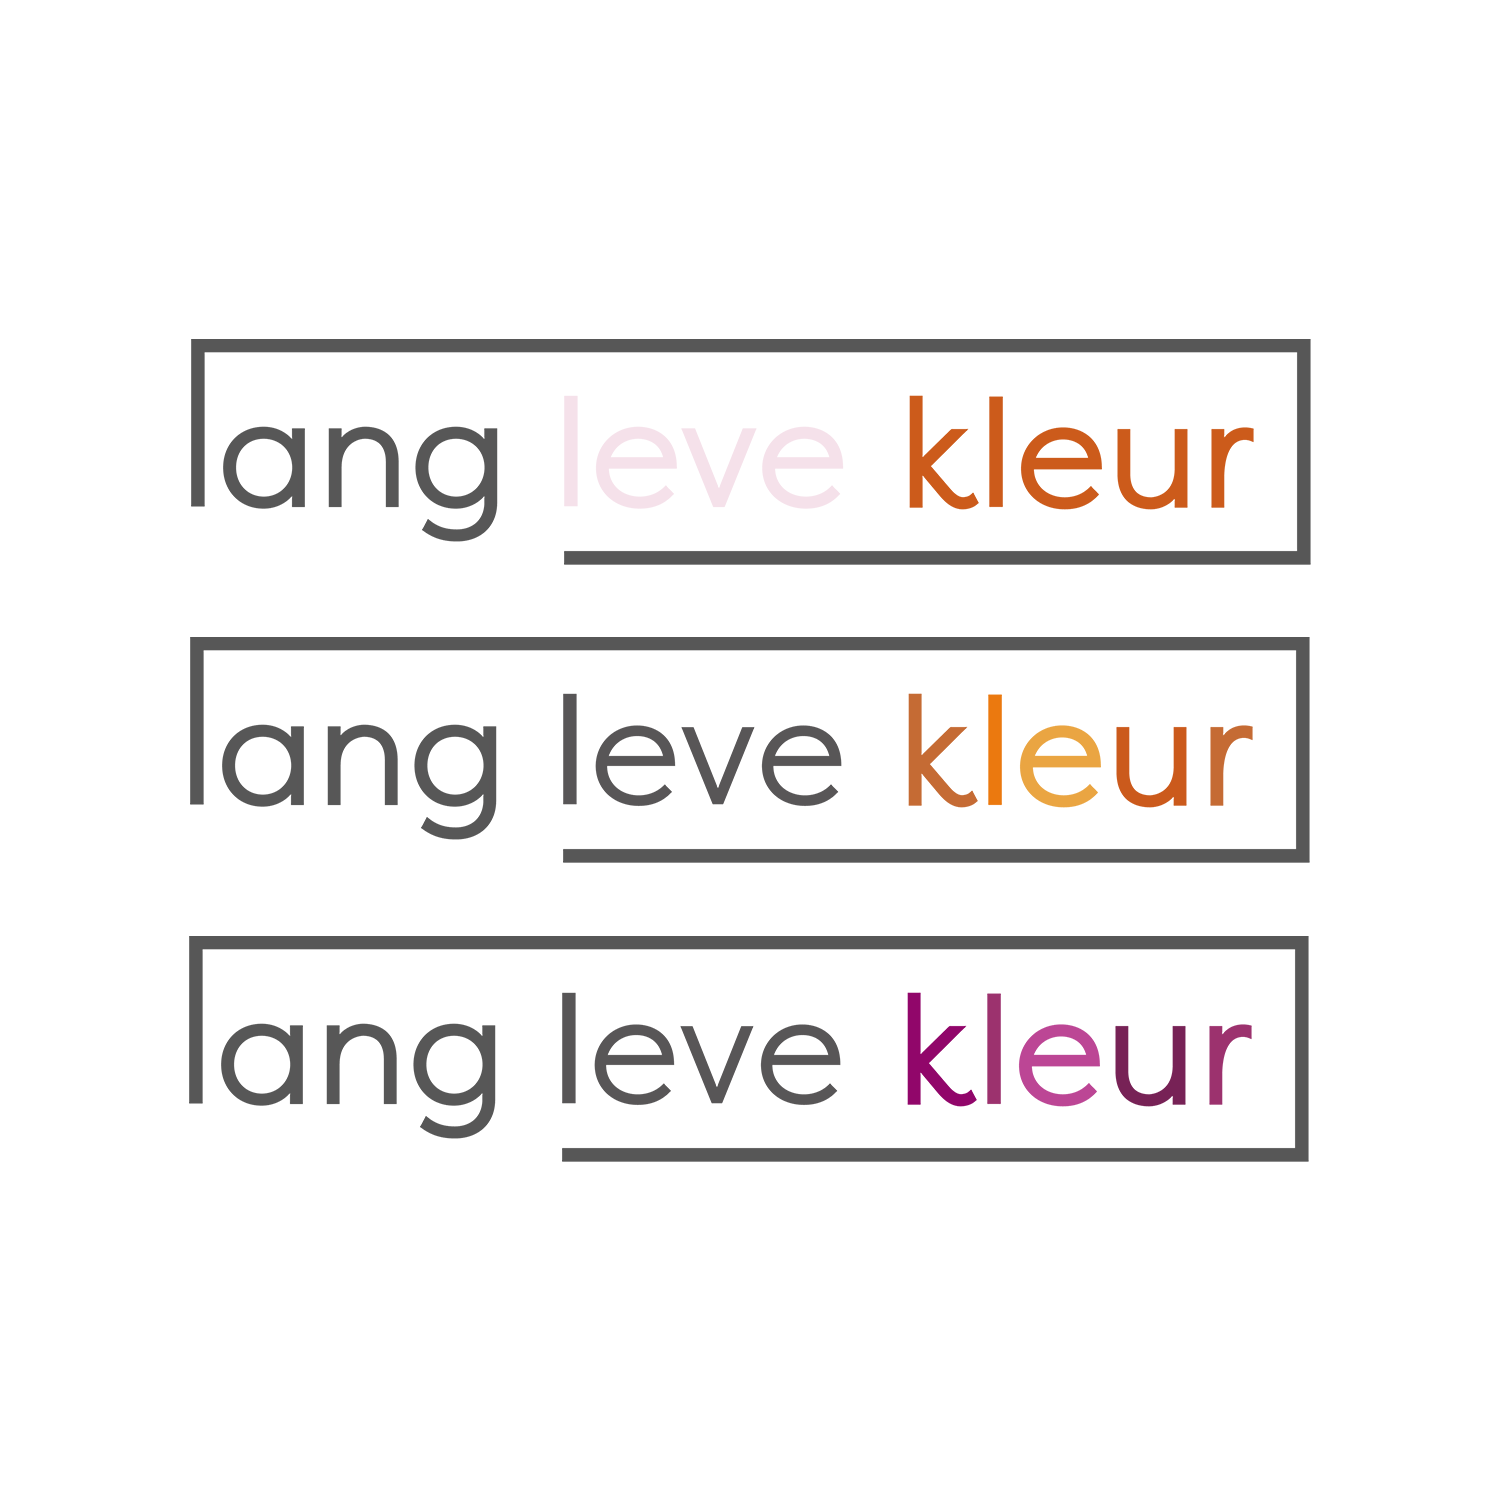 Logo Lang Leve Kleur